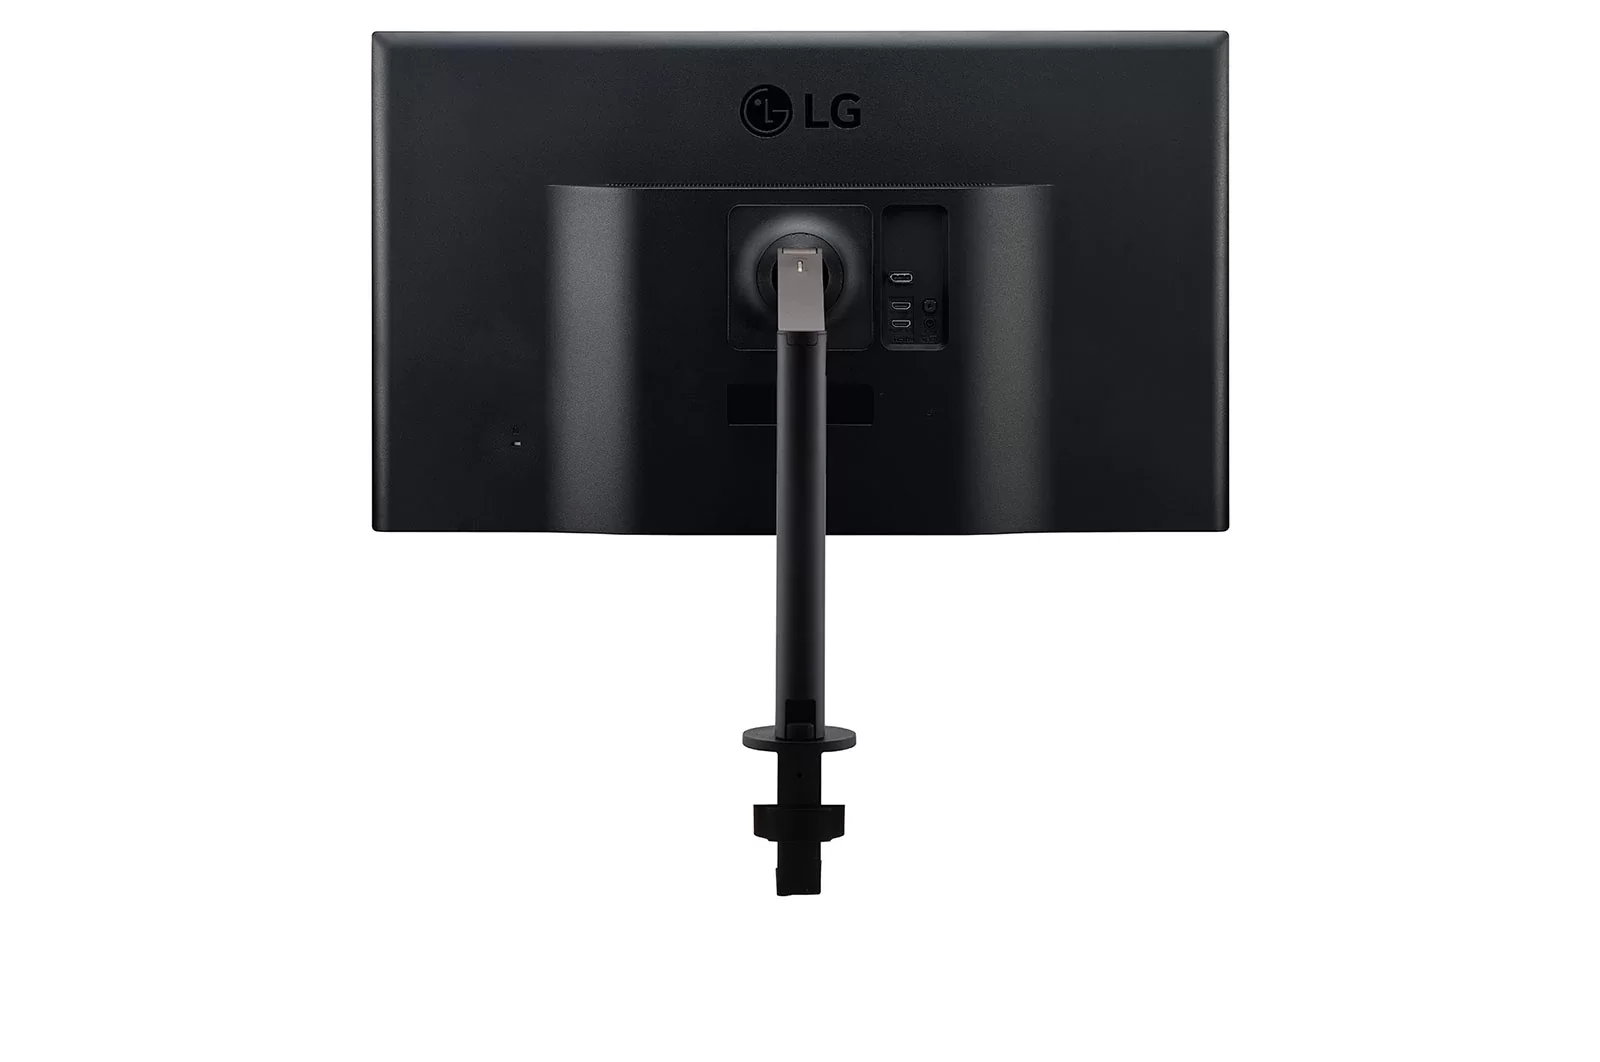 Monitor LG UltraWide Ergonómico de 34“ 